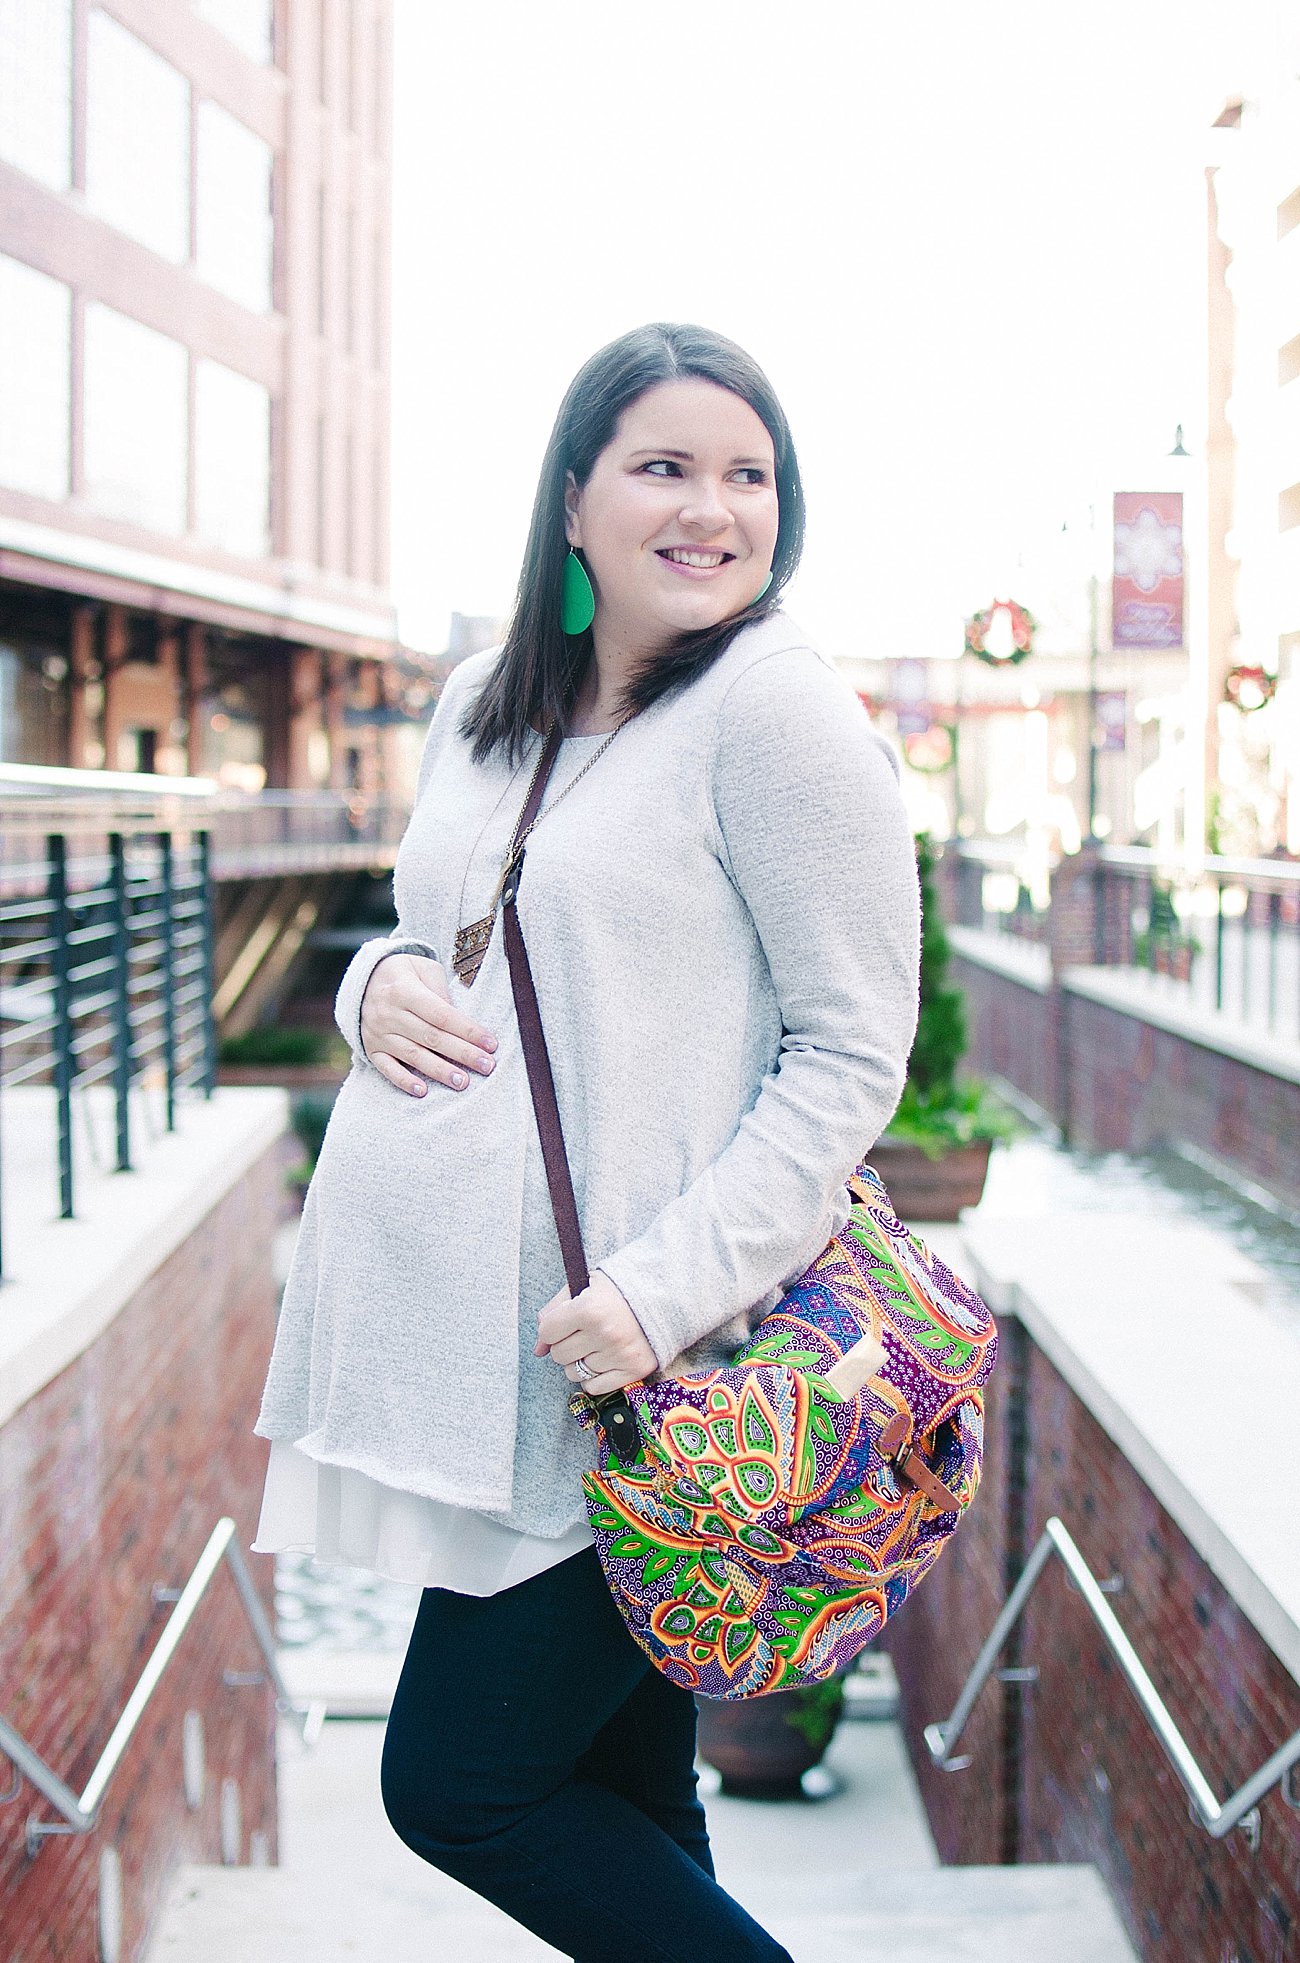 Pinkblush Maternity tunic and Nena & Co. loafers - Maternity style